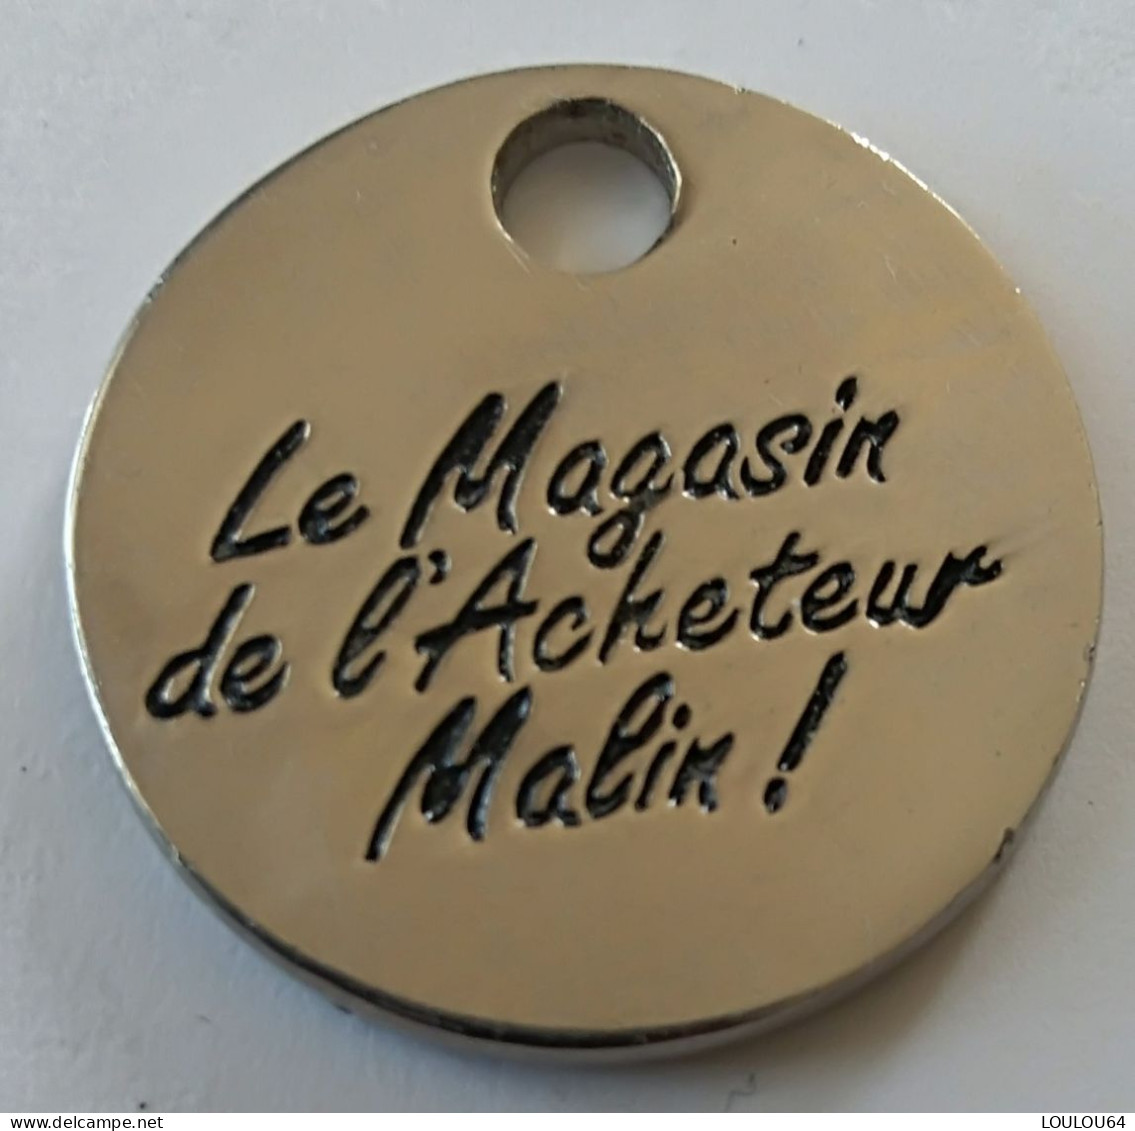 Jeton De Caddie - MDA - ELECTROMENAGER - Le Magasin De L'Acheteur Malin ! - En Métal - (1) - - Einkaufswagen-Chips (EKW)